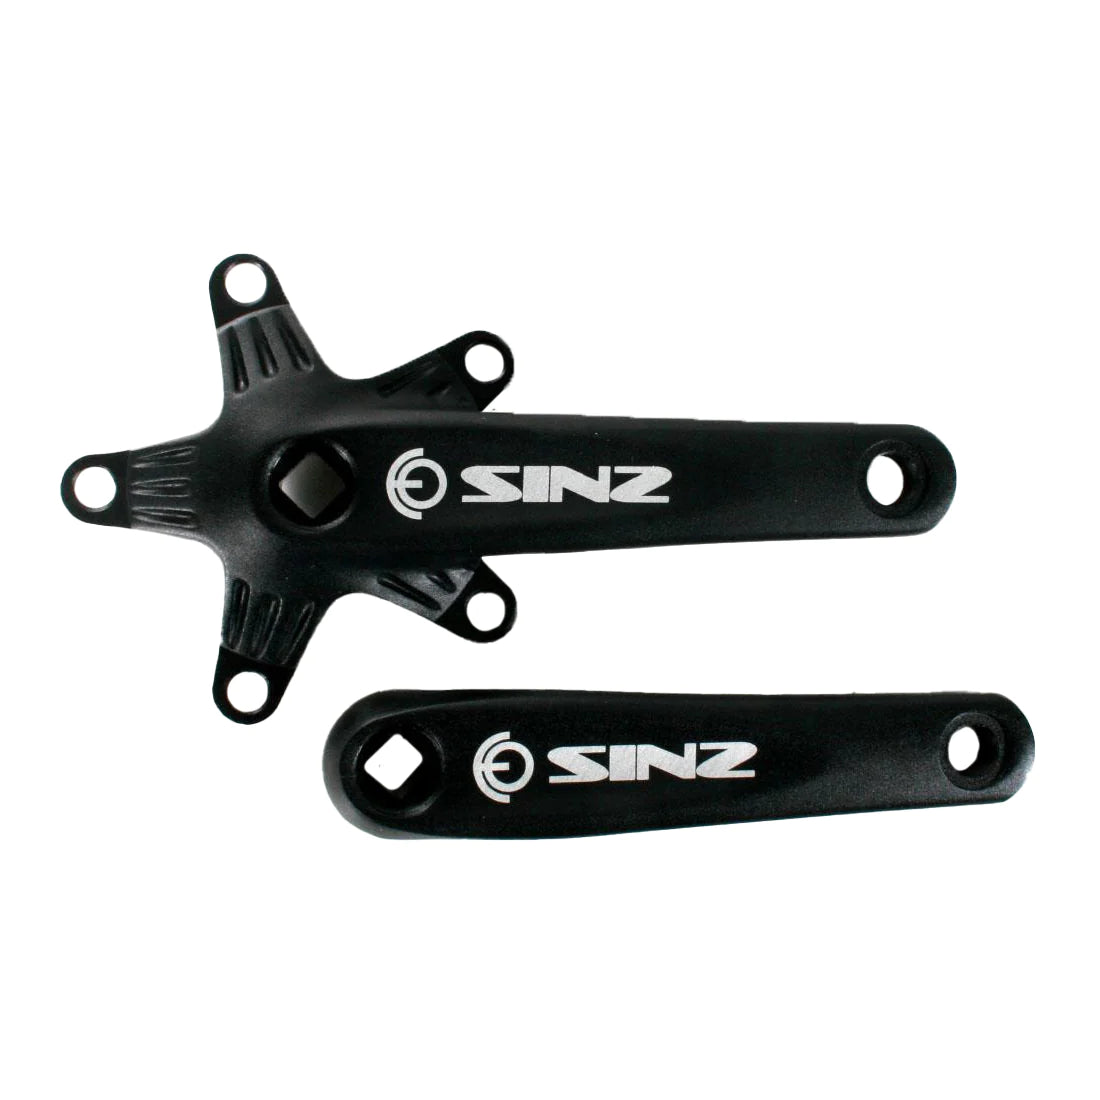 Sinz Square Tapered BMX Crank Arms-Black